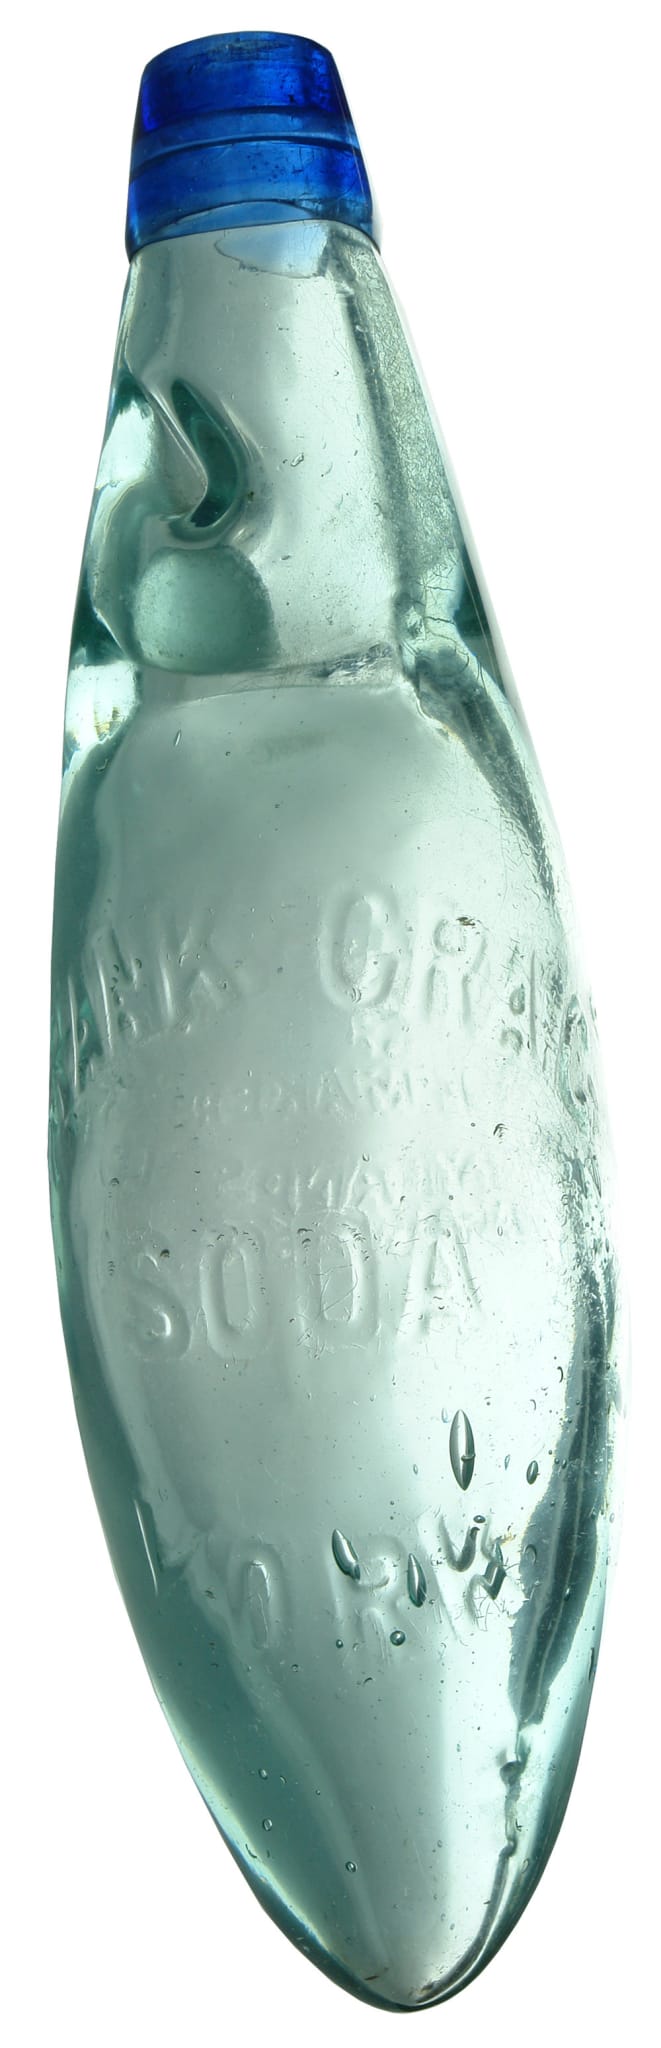 Frank Craig Soda York Blue Lip Hybrid Codd Bottle